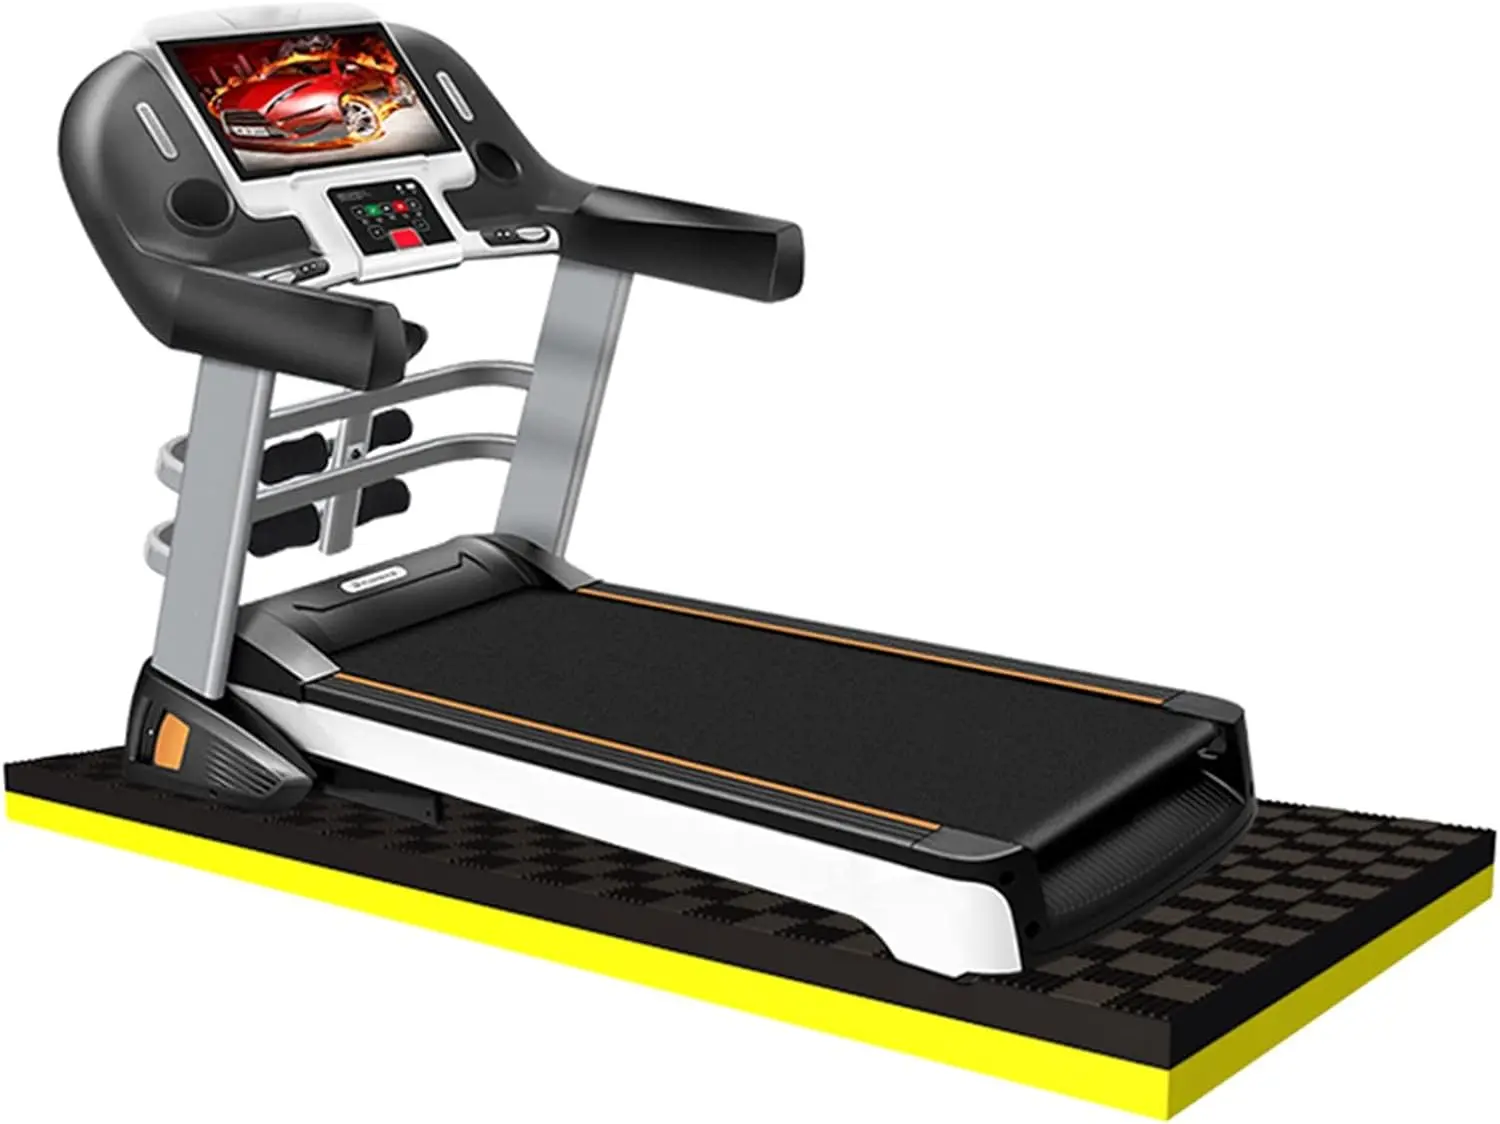 Put an anti-vibration mat underneath the treadmill